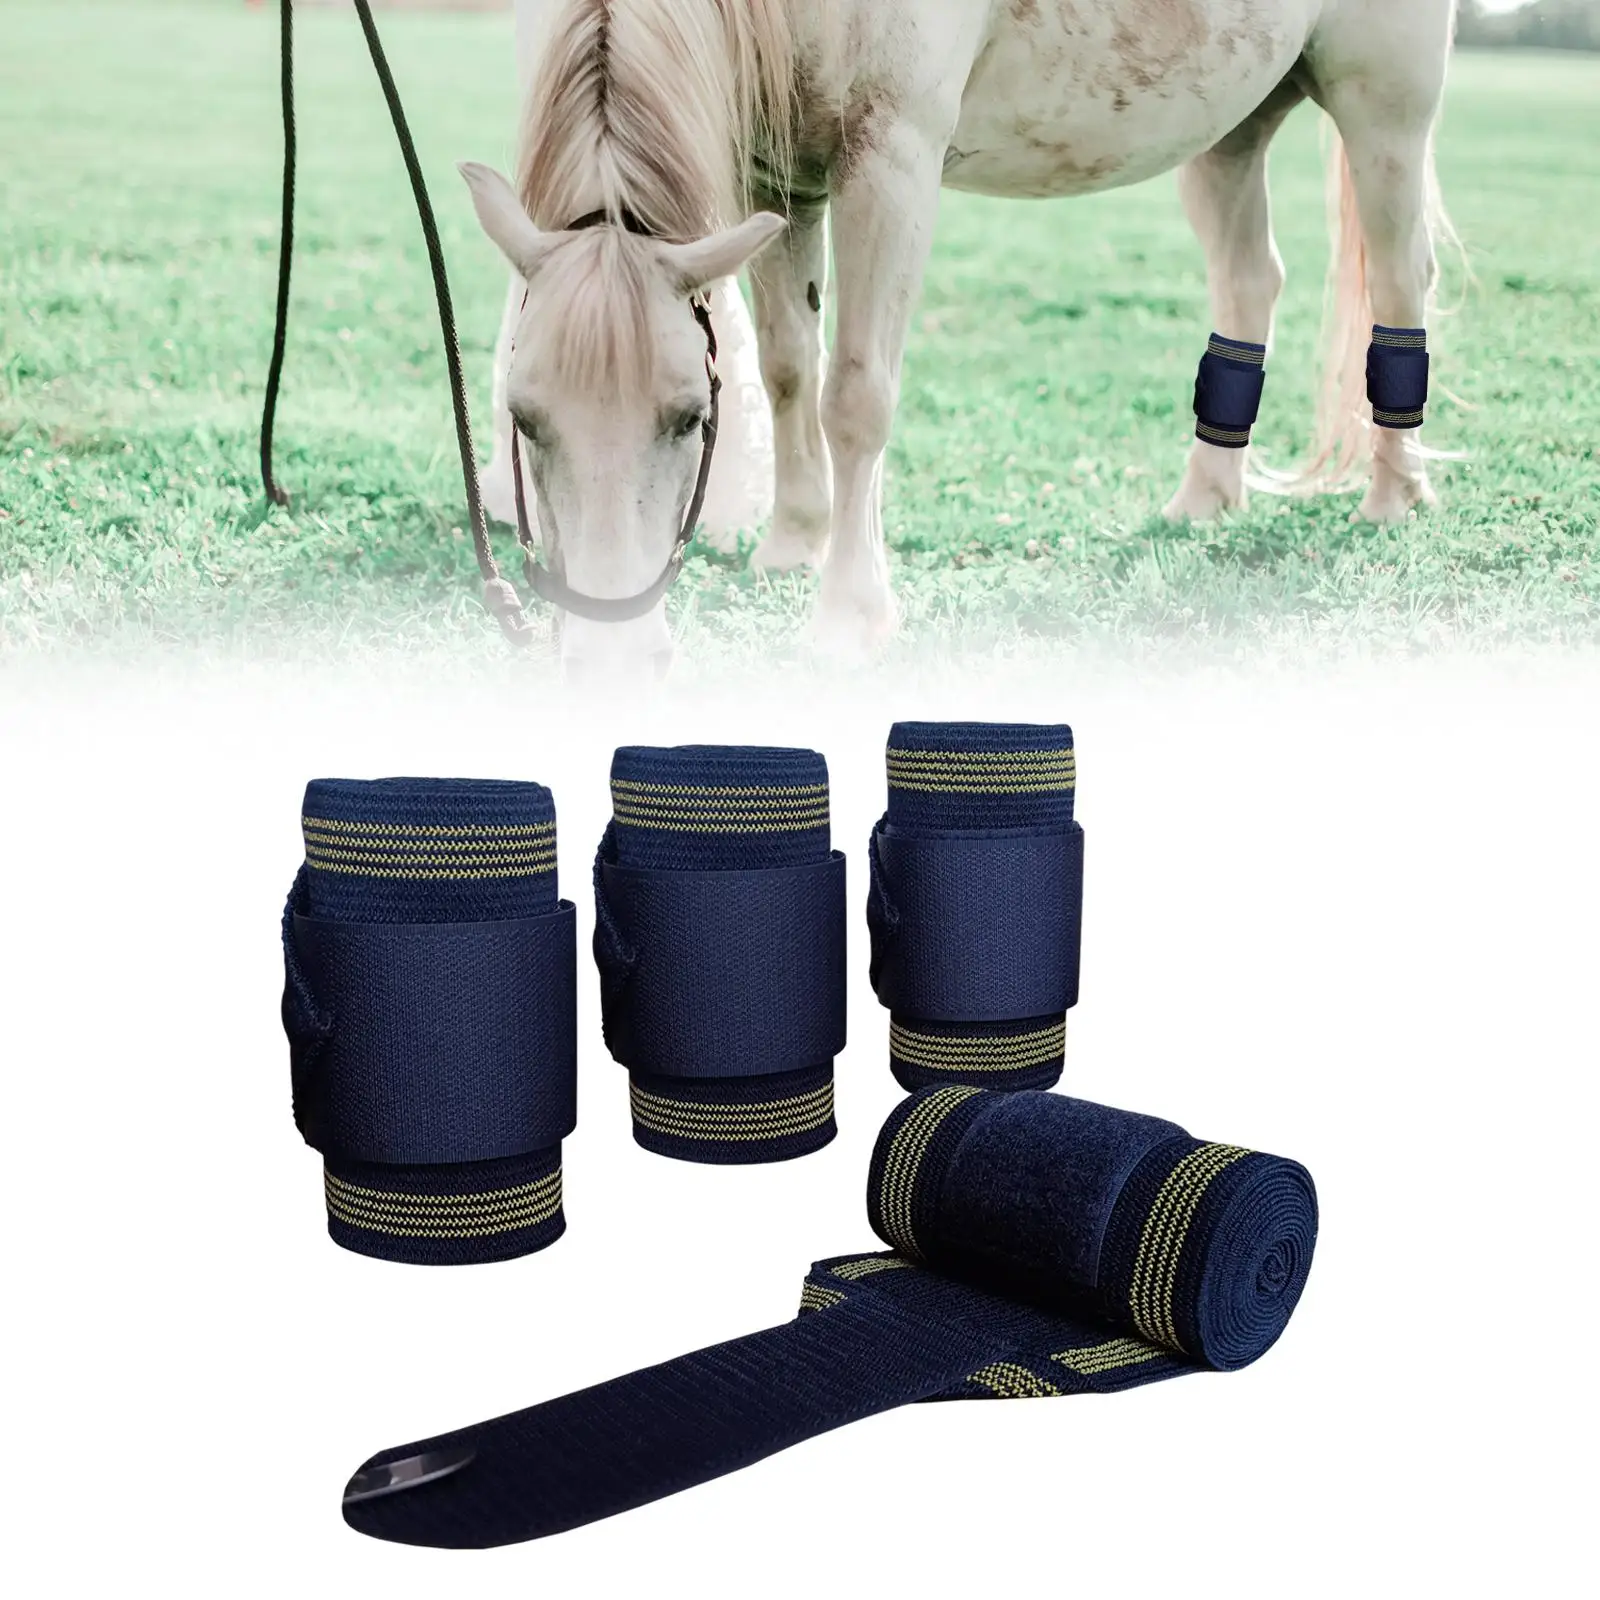 4 Pieces Horse Leg Wraps Thick Leg Protection Belt Equestrian Equipment